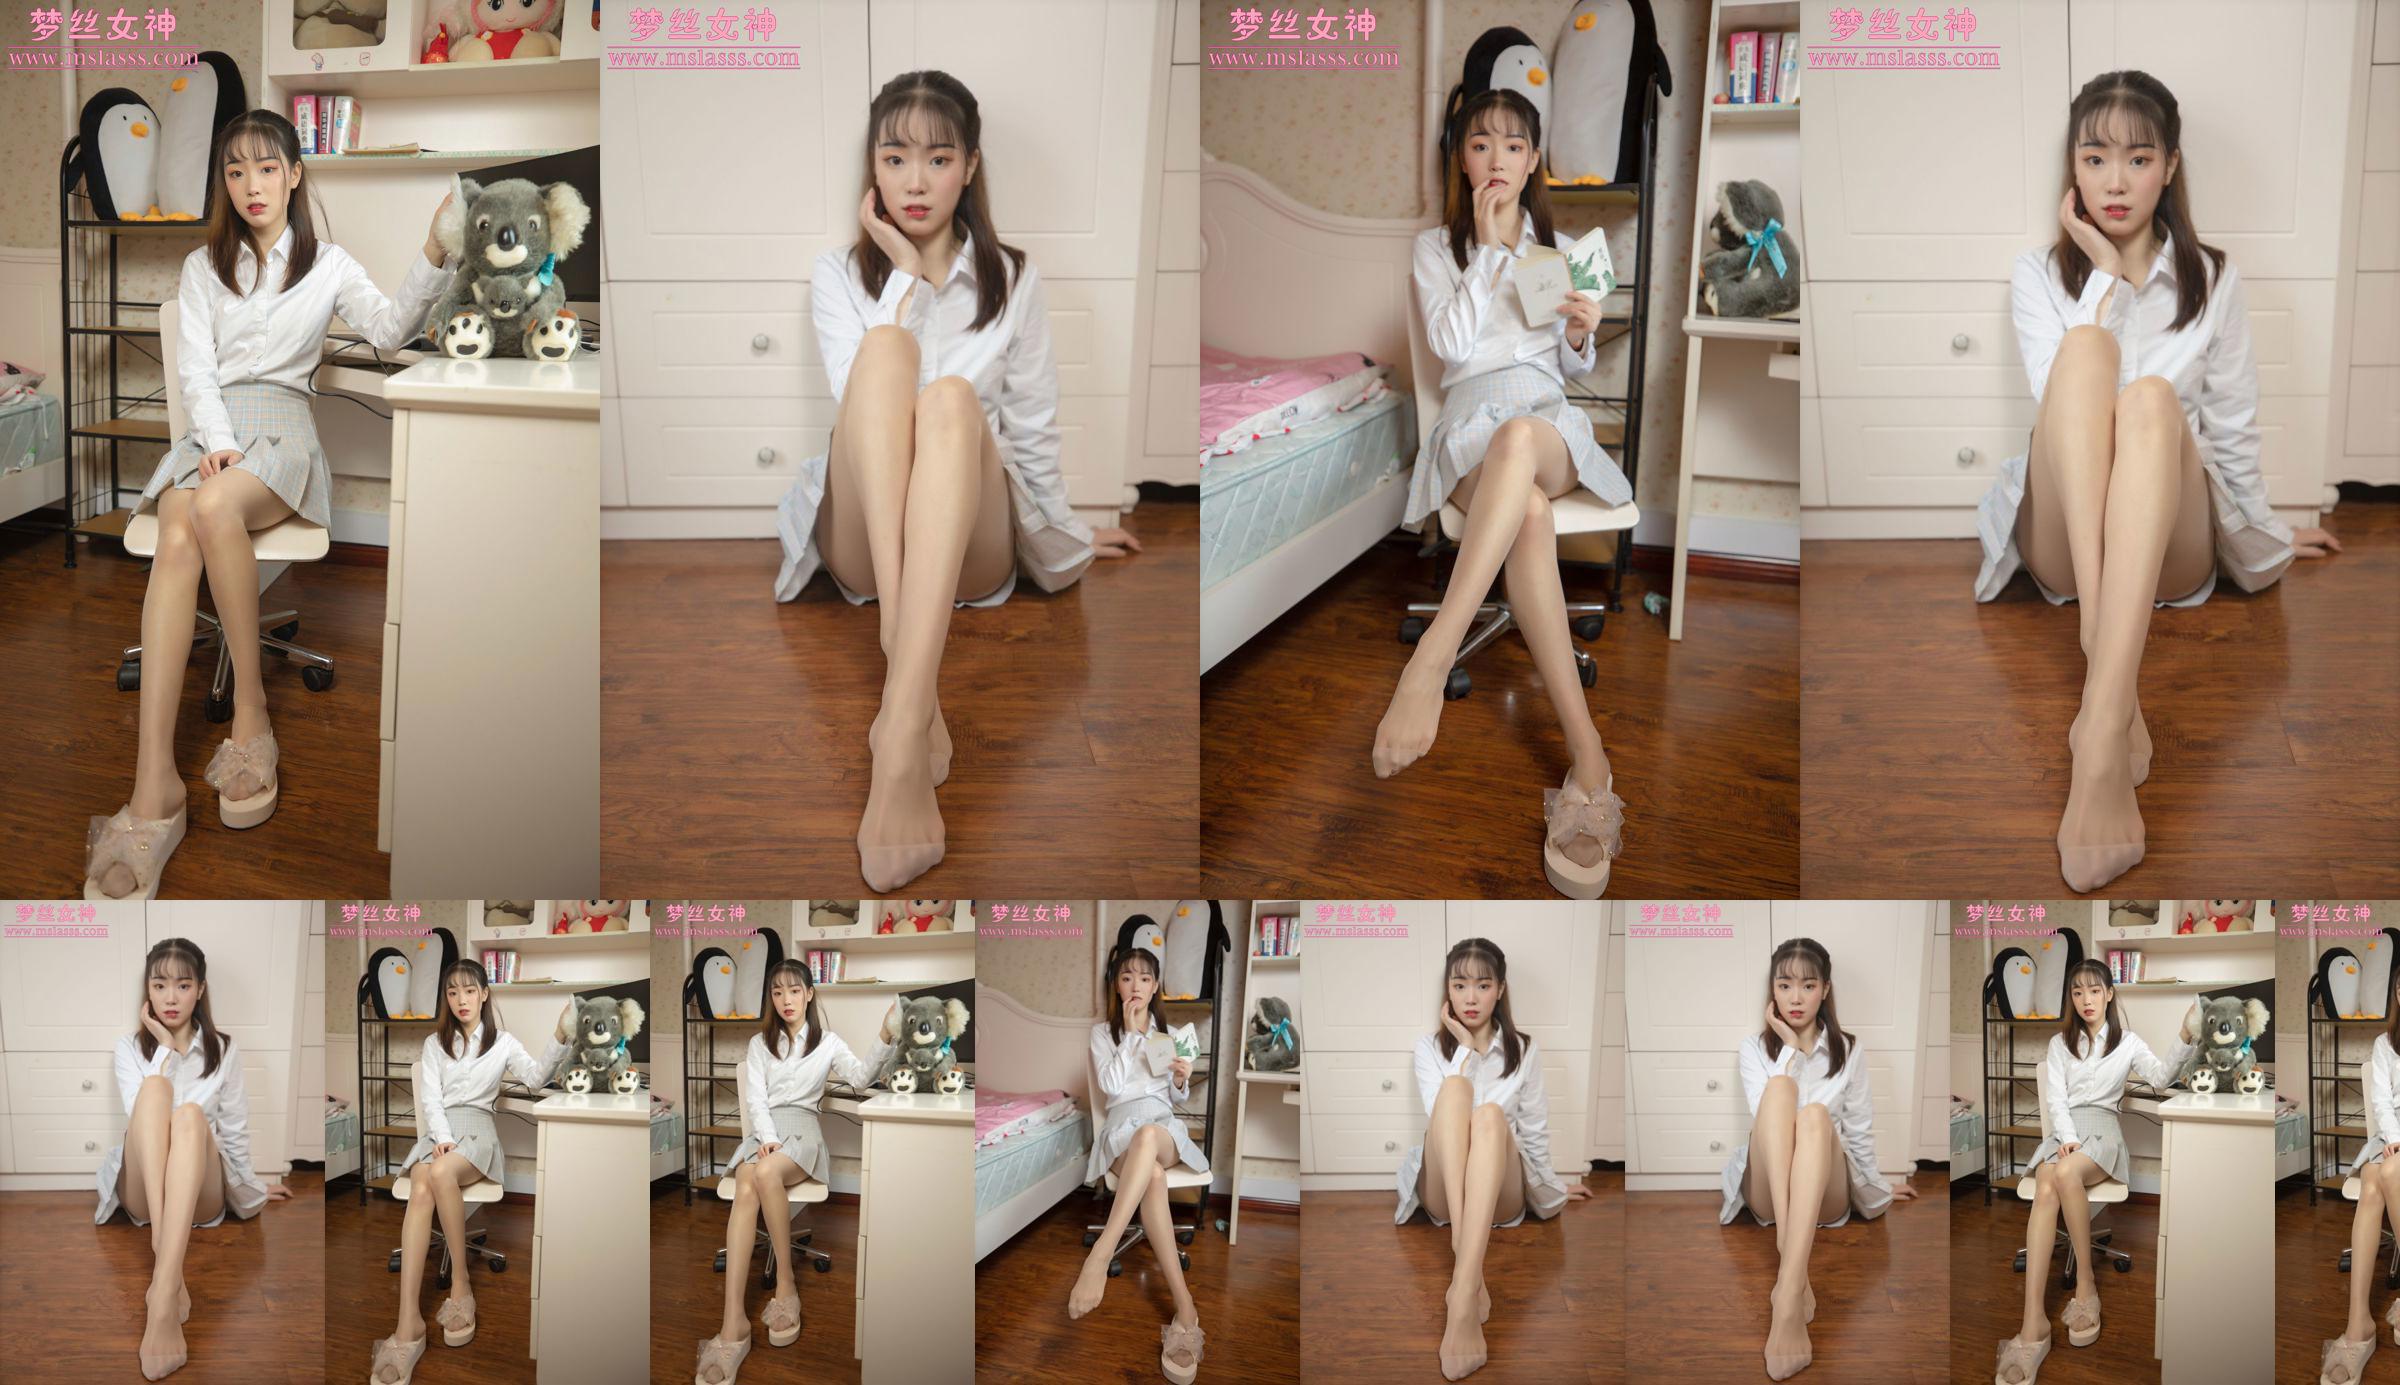 [MSLASS] Zhang Qiying new model goddess No.6e759c Page 2